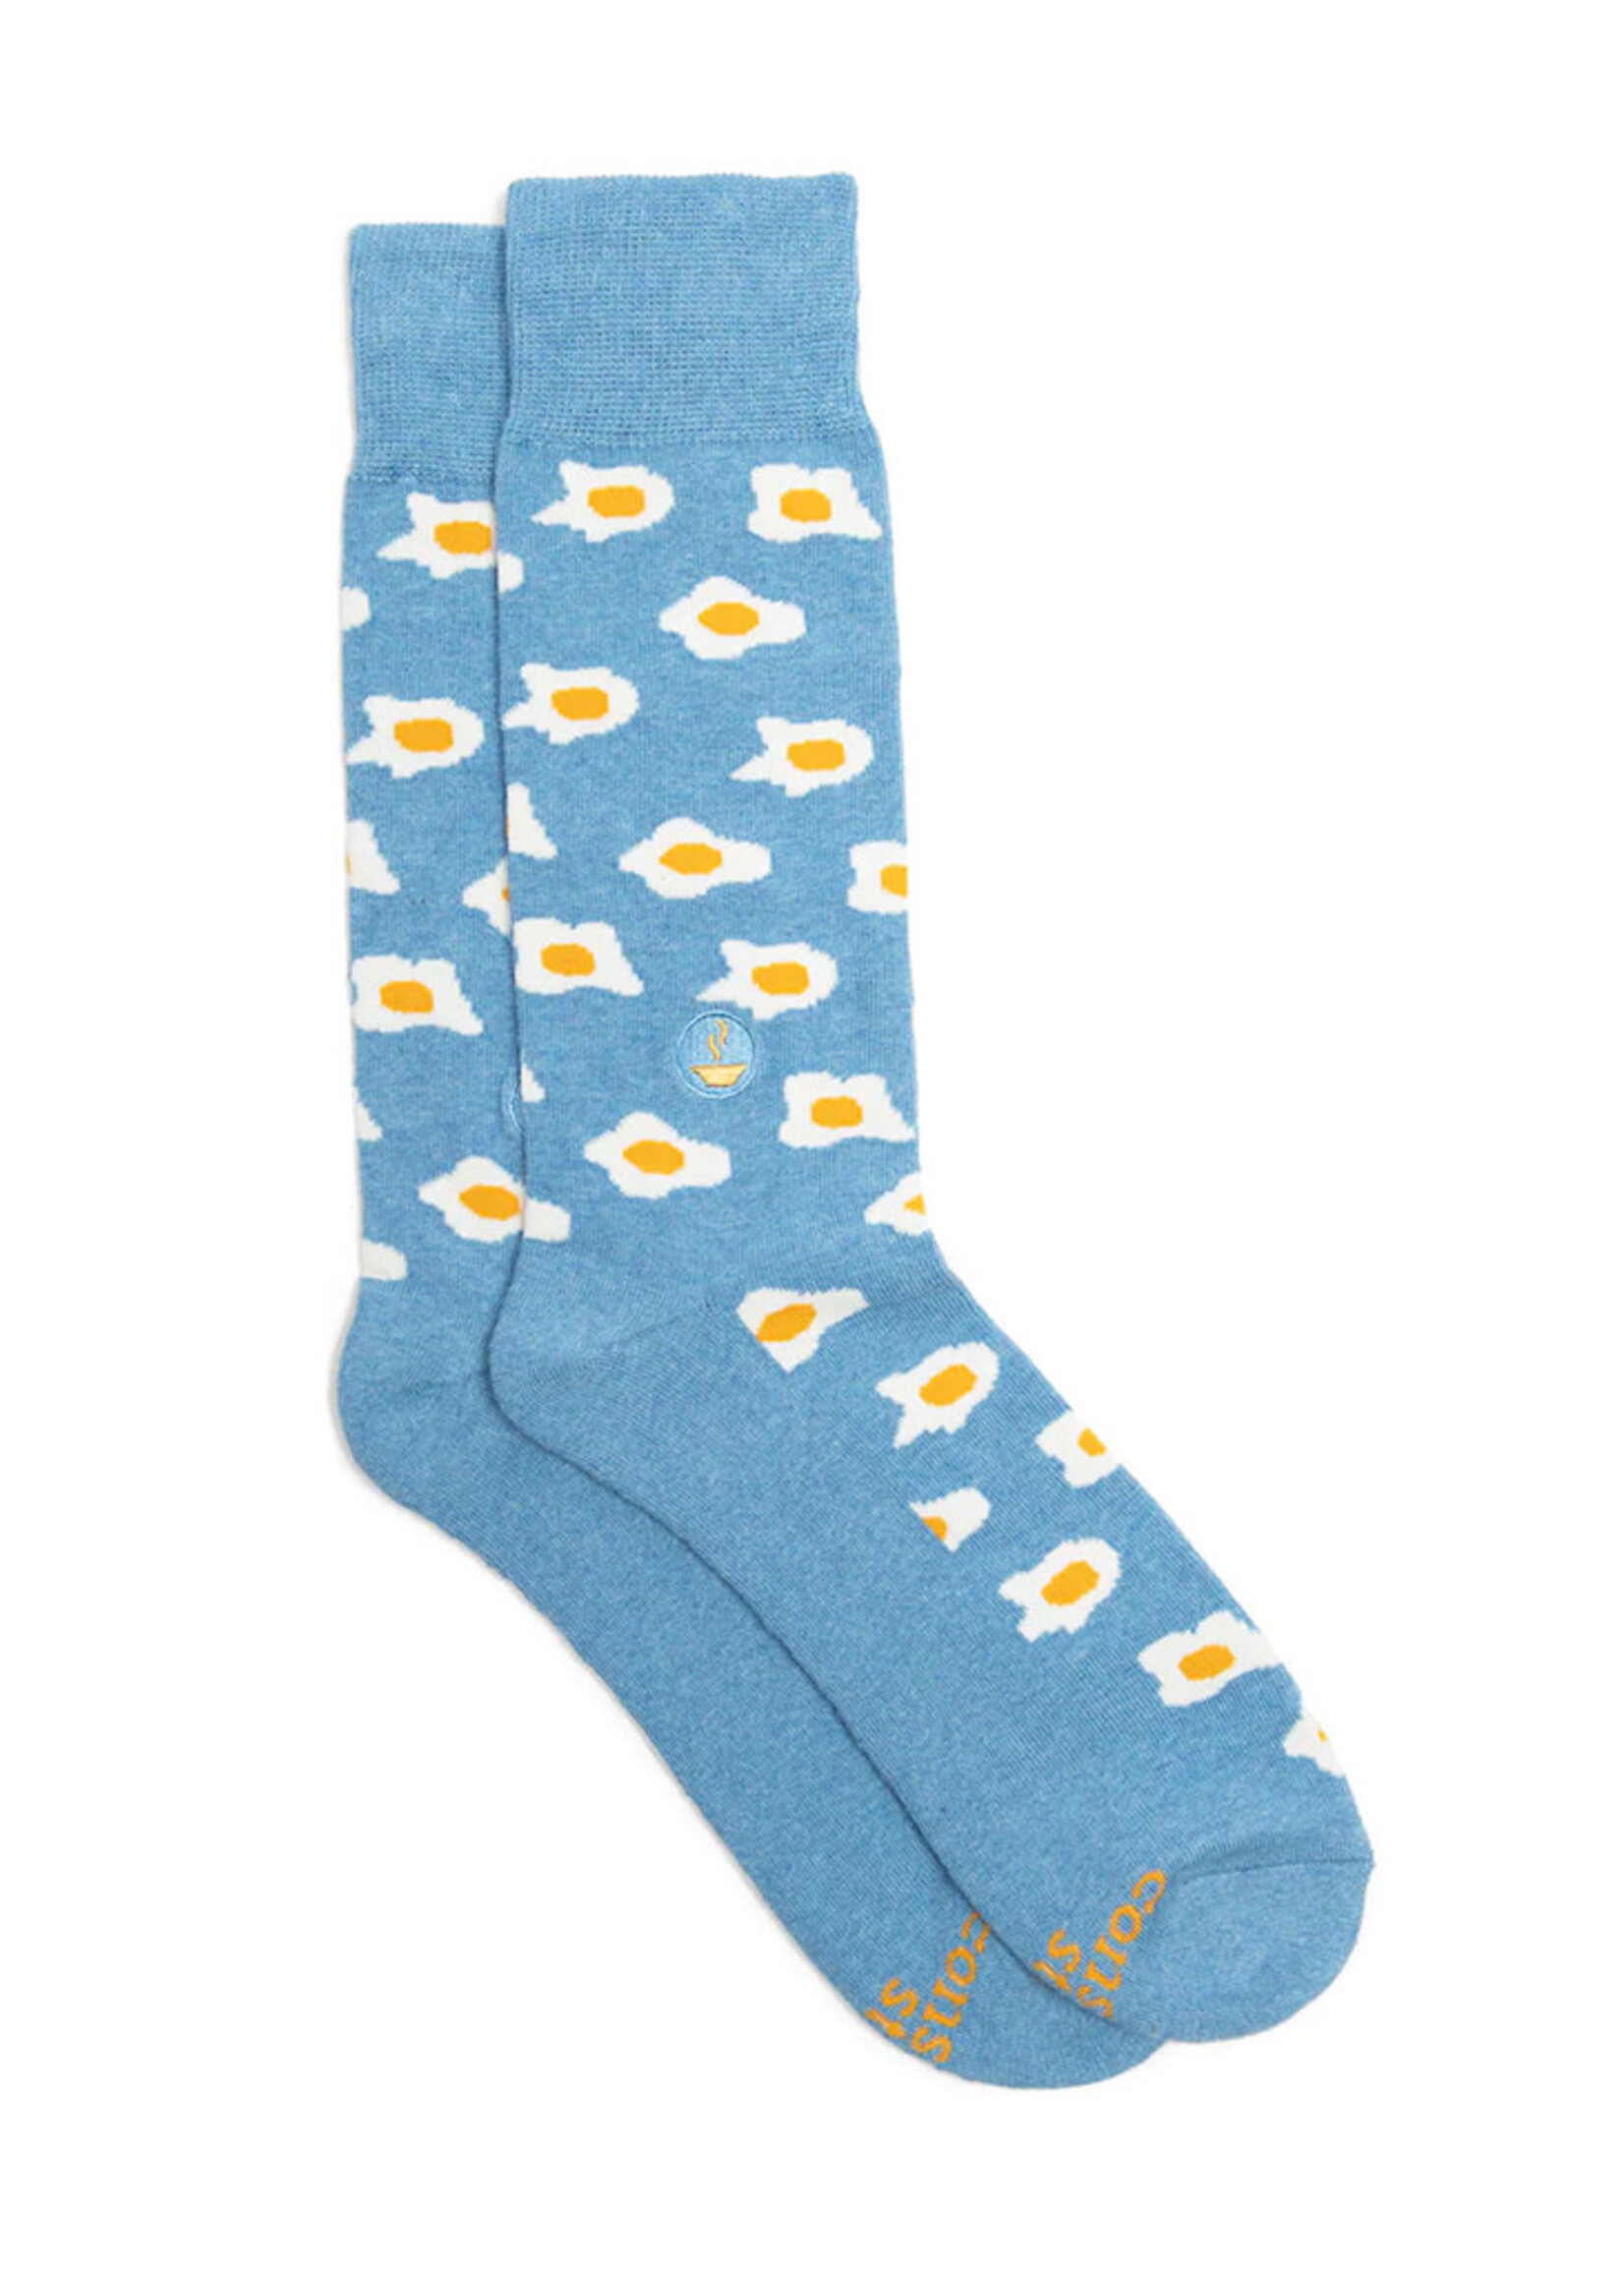 Conscious Step Men's Egg Socks that Provide Meals